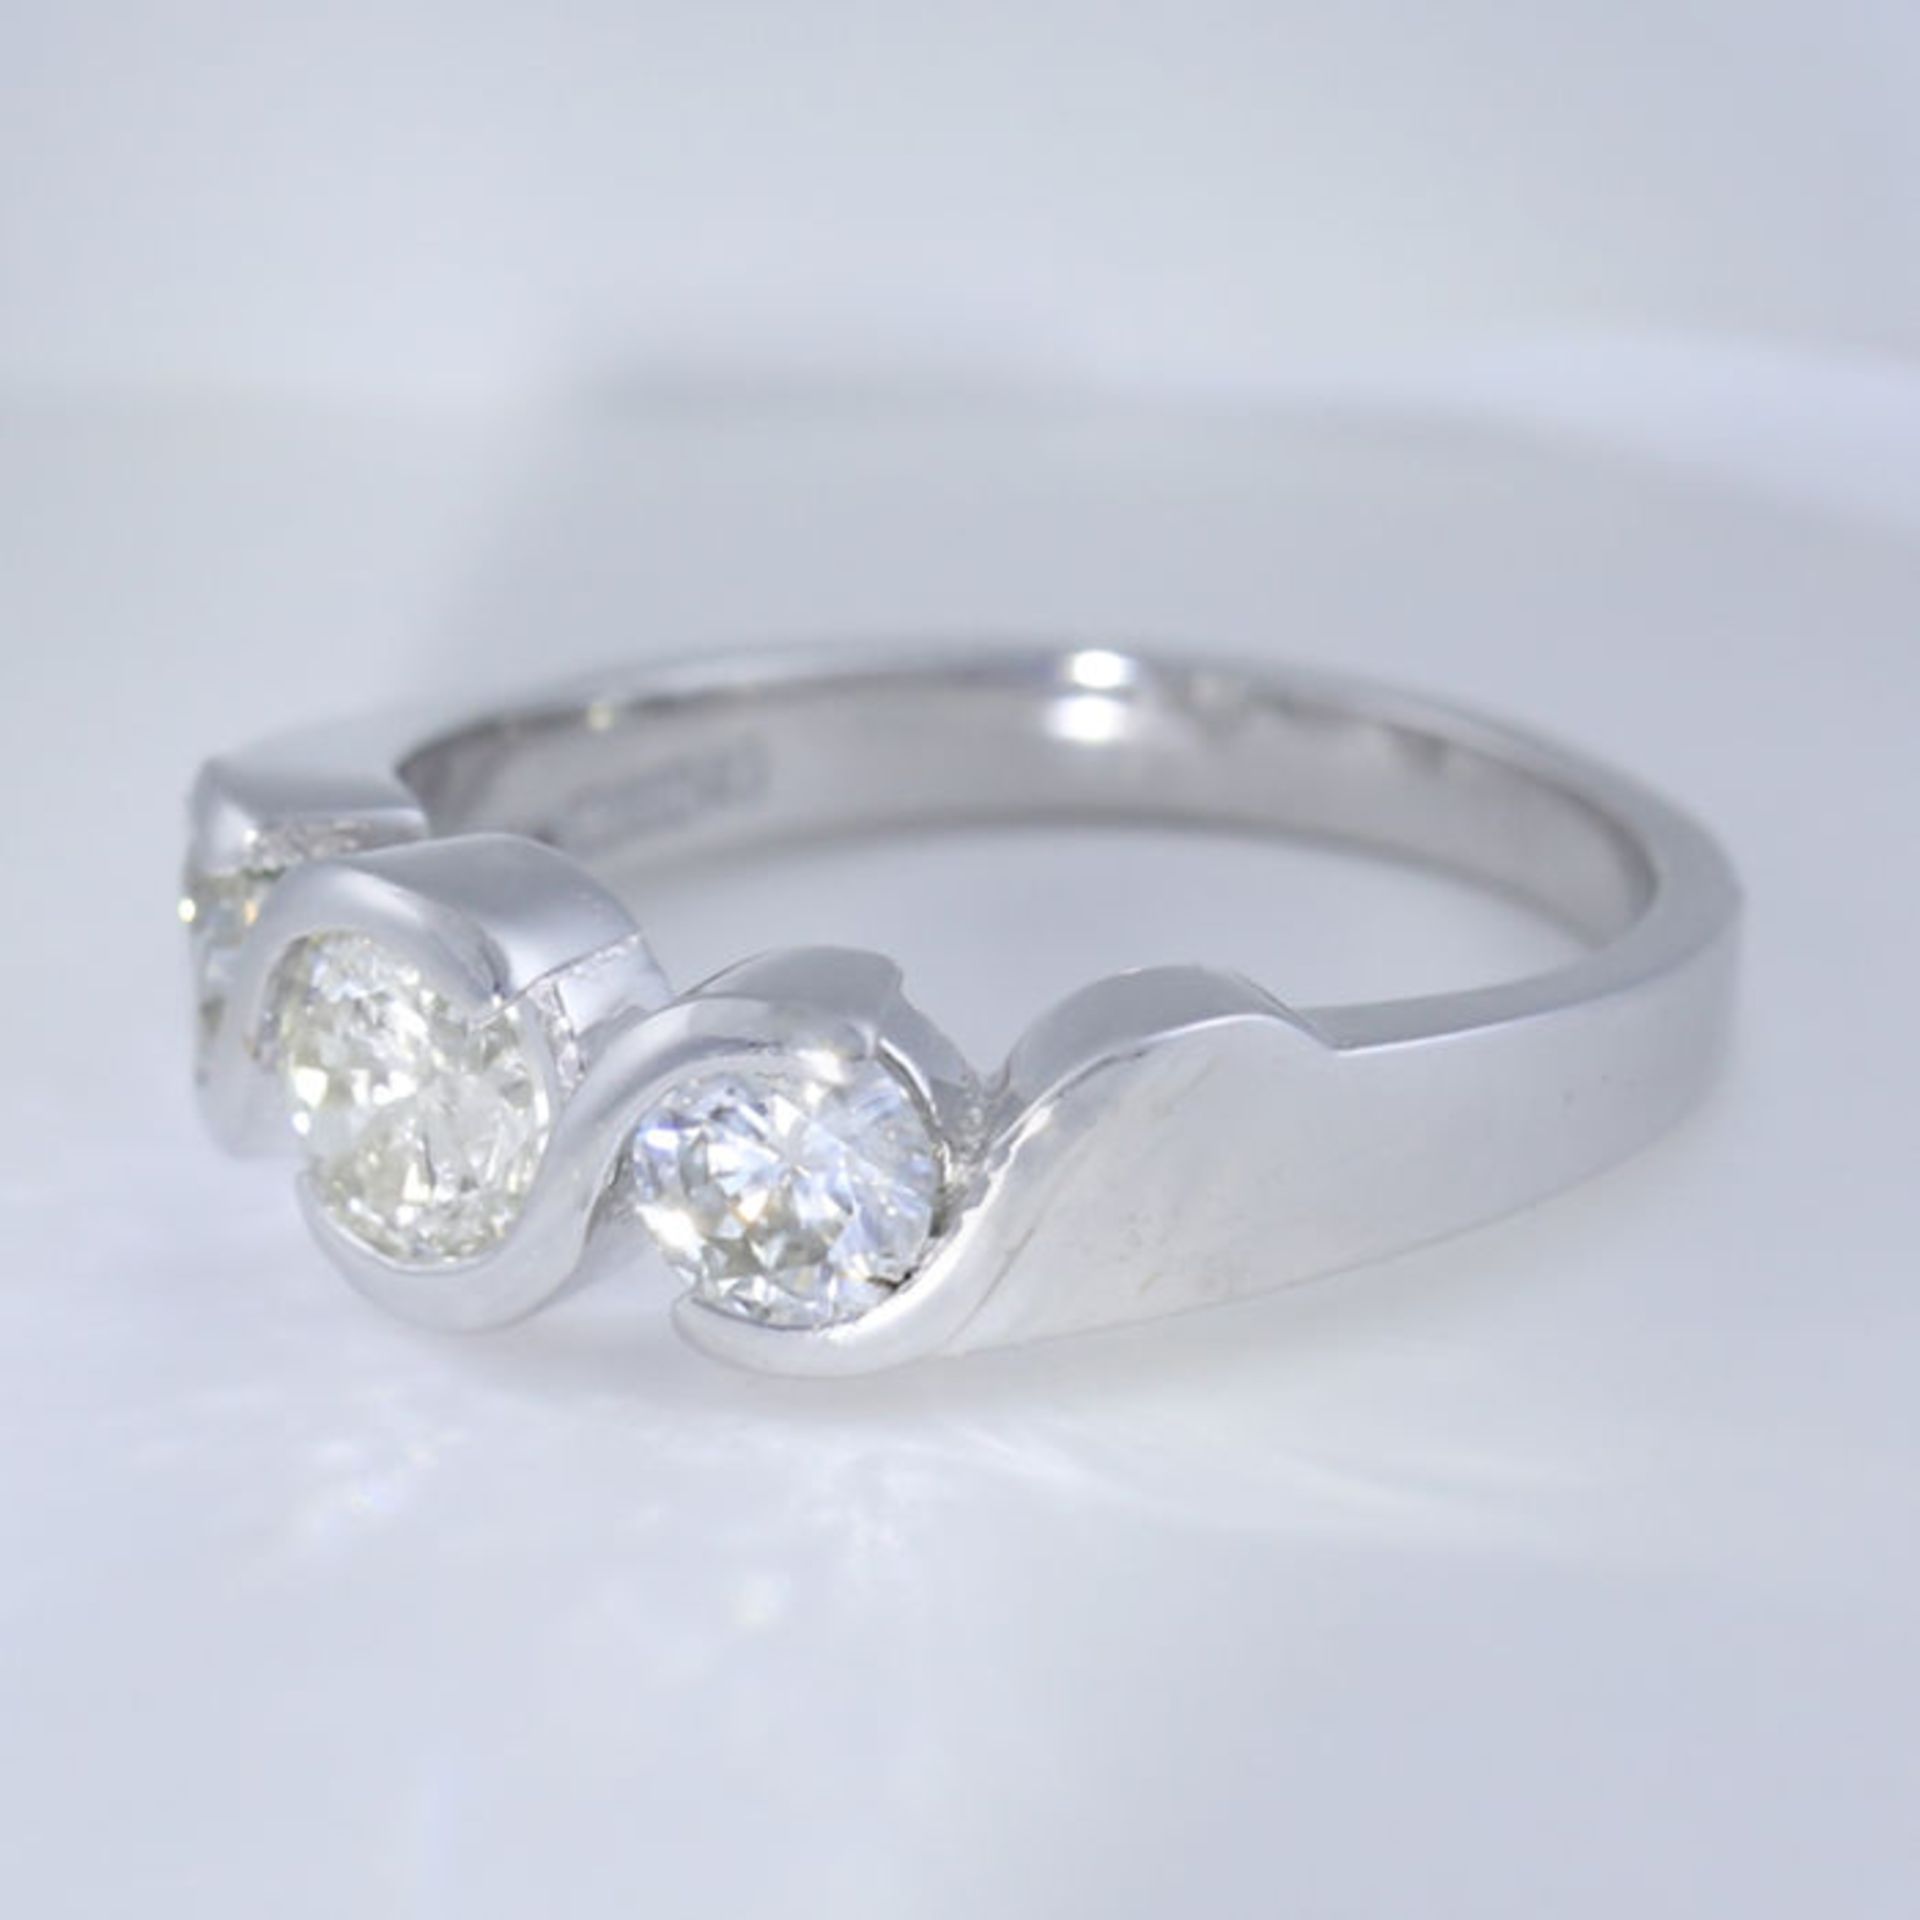 IGI Certified 14 K / 575 White Gold Solitaire Diamond Ring - Image 4 of 6